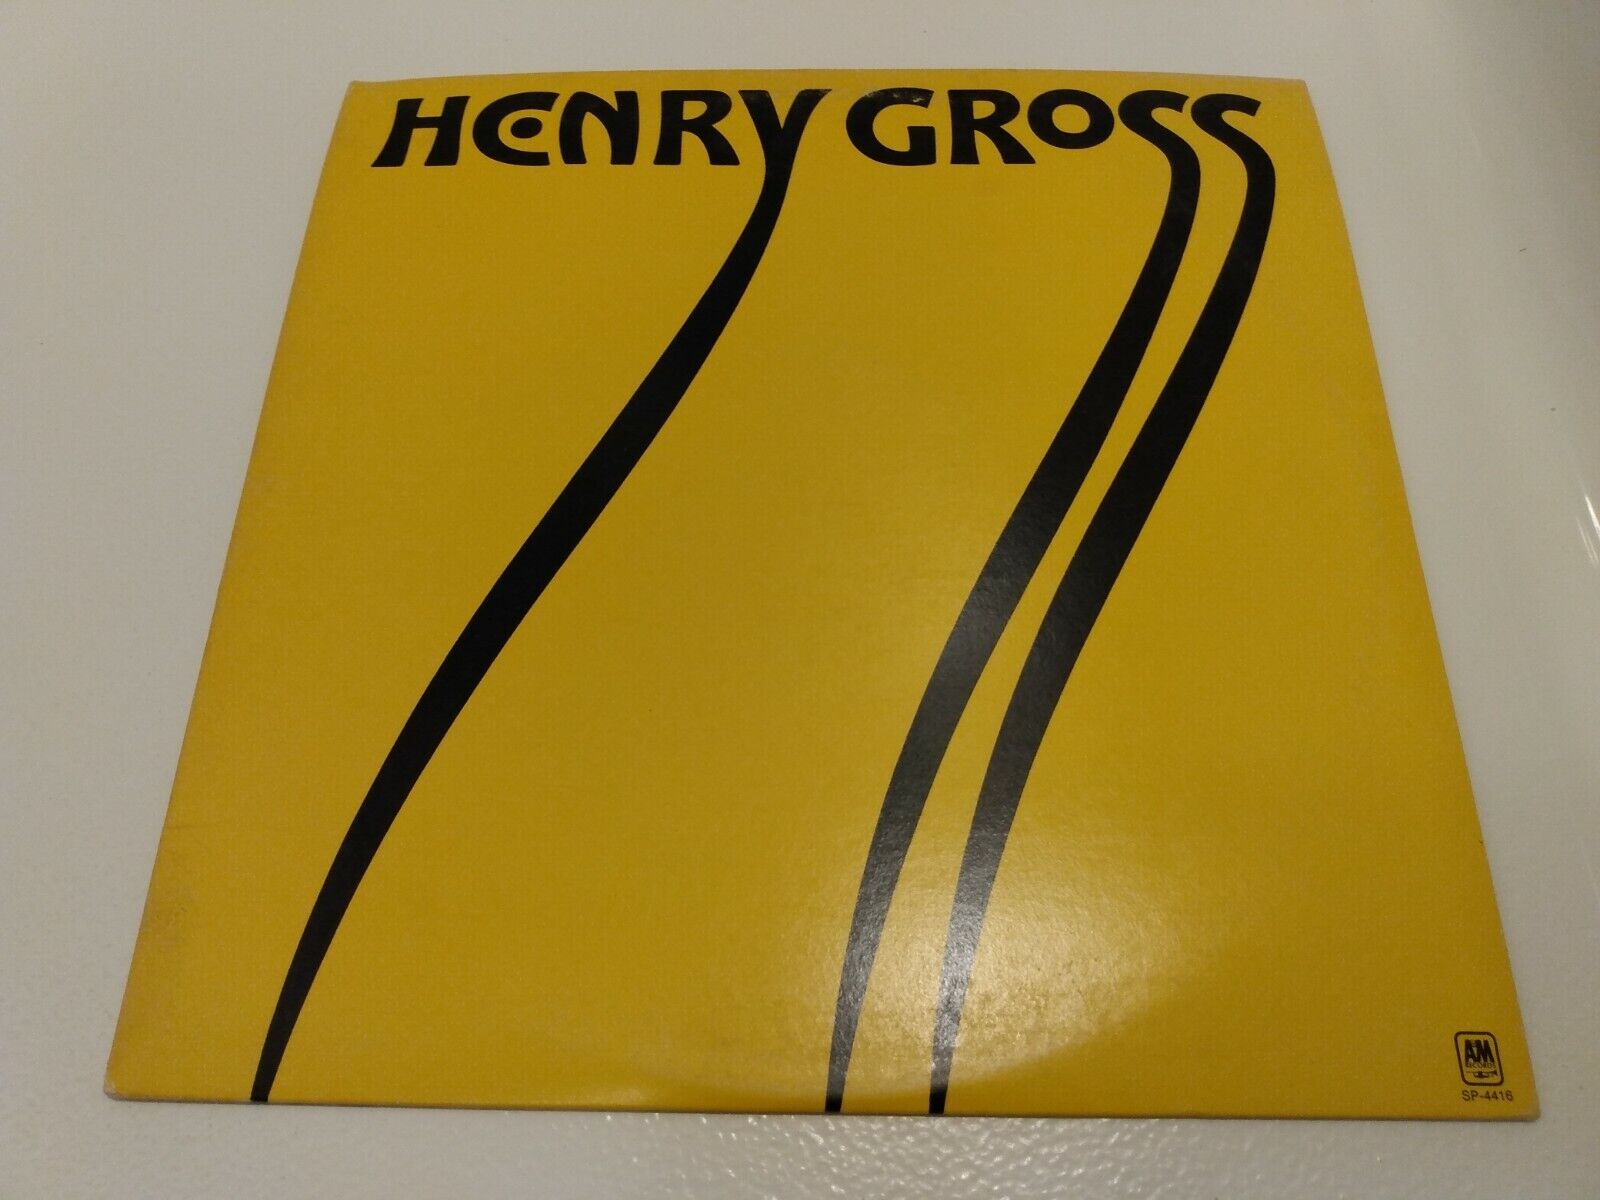 HENRY GROSS (VG+) SP-4416 LP VINYL RECORD